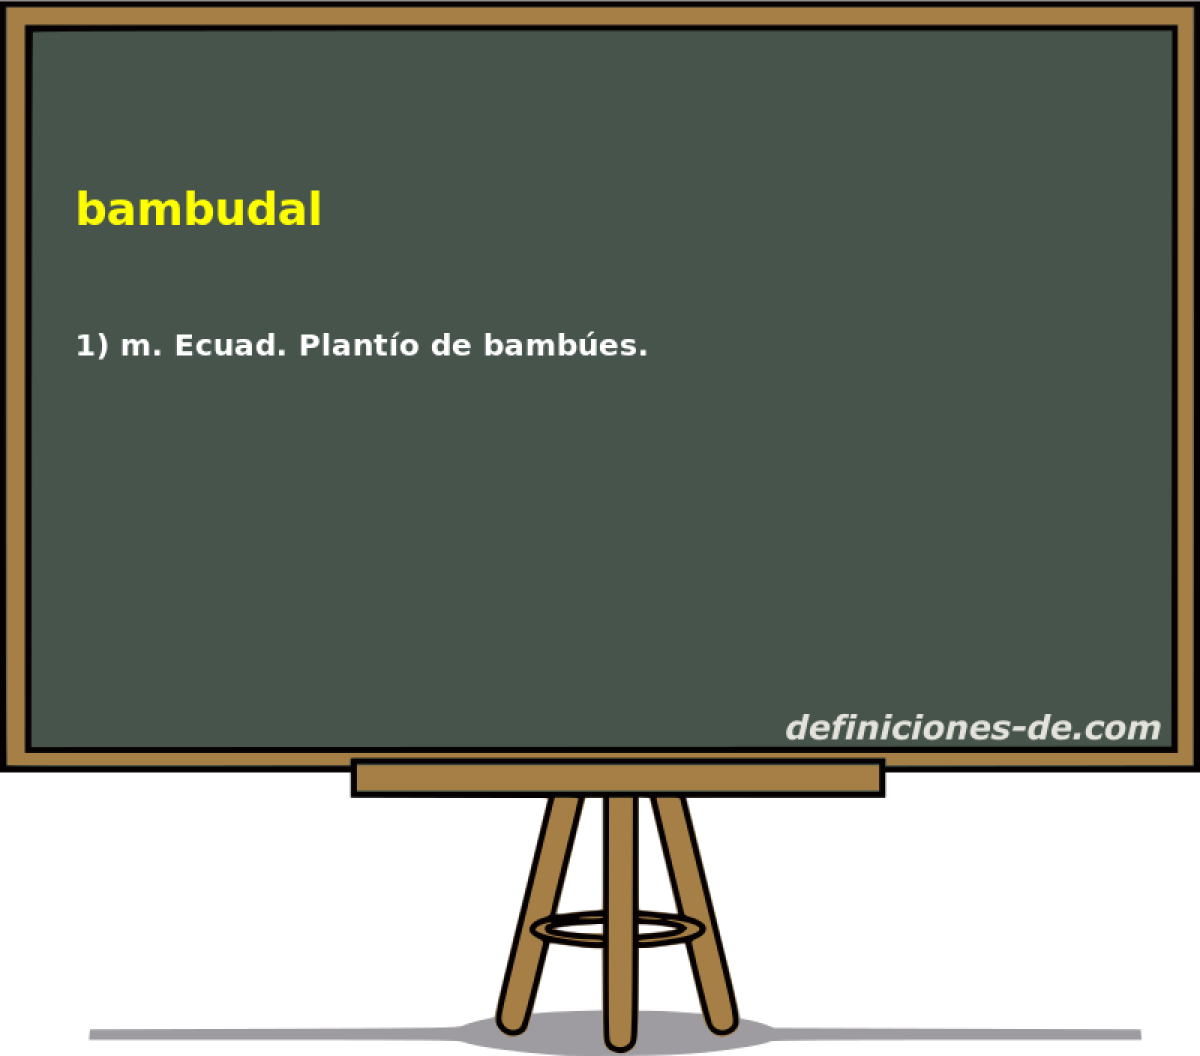 bambudal 